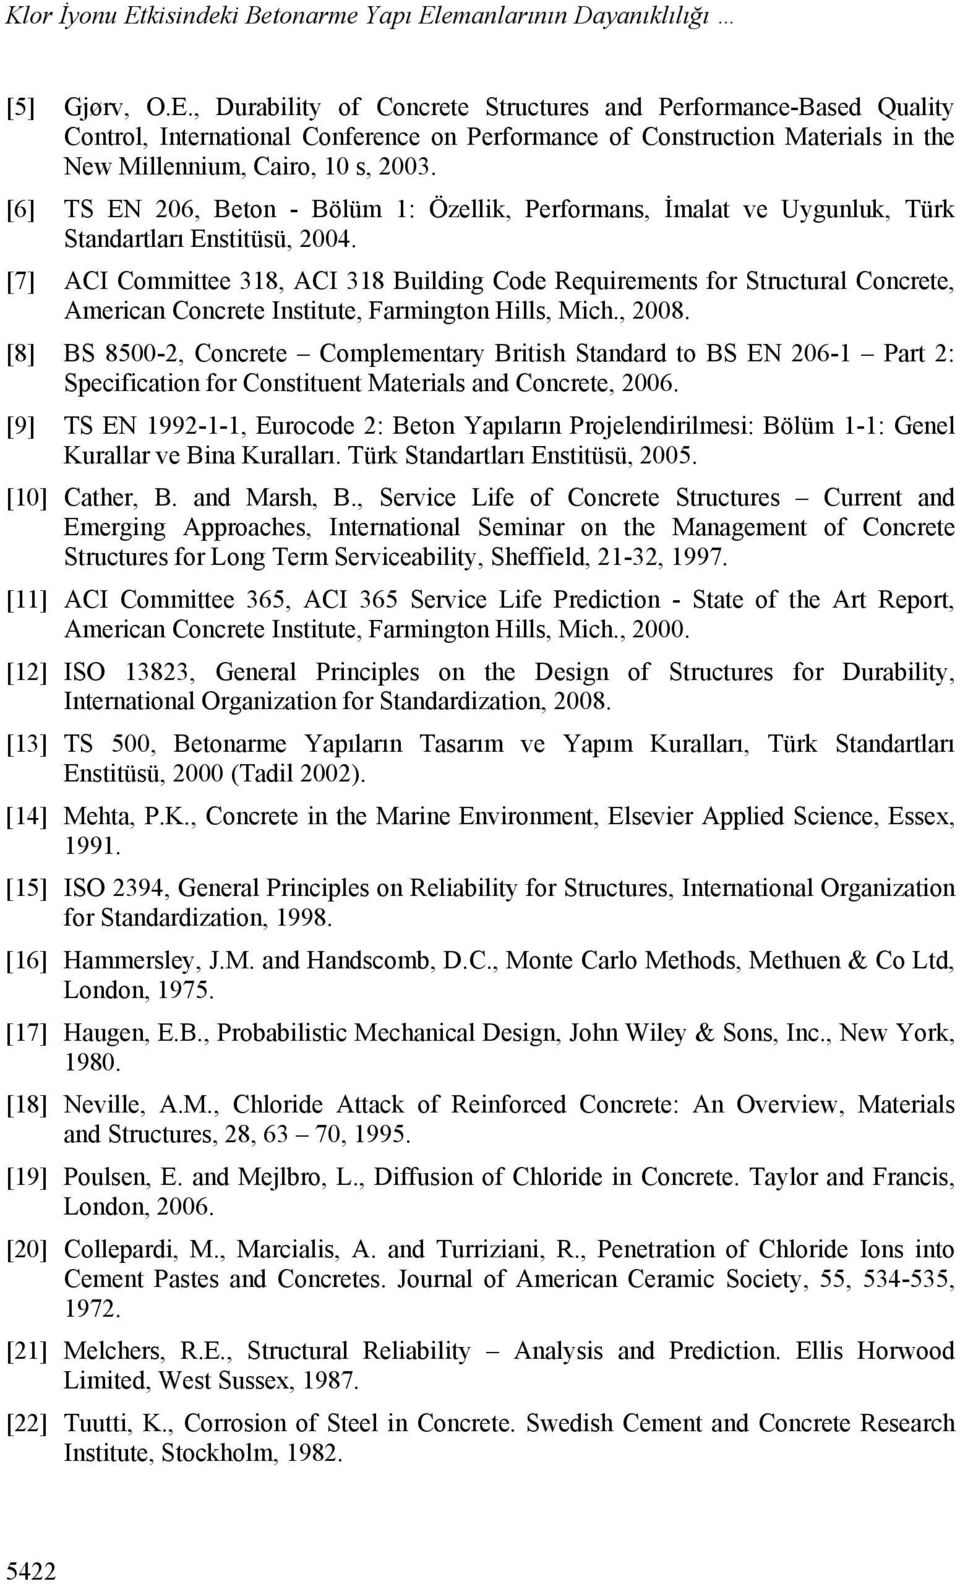 [7] ACI Committee 318, ACI 318 Building Code Requirements for Structural Concrete, American Concrete Institute, Farmington Hills, Mich., 2008.